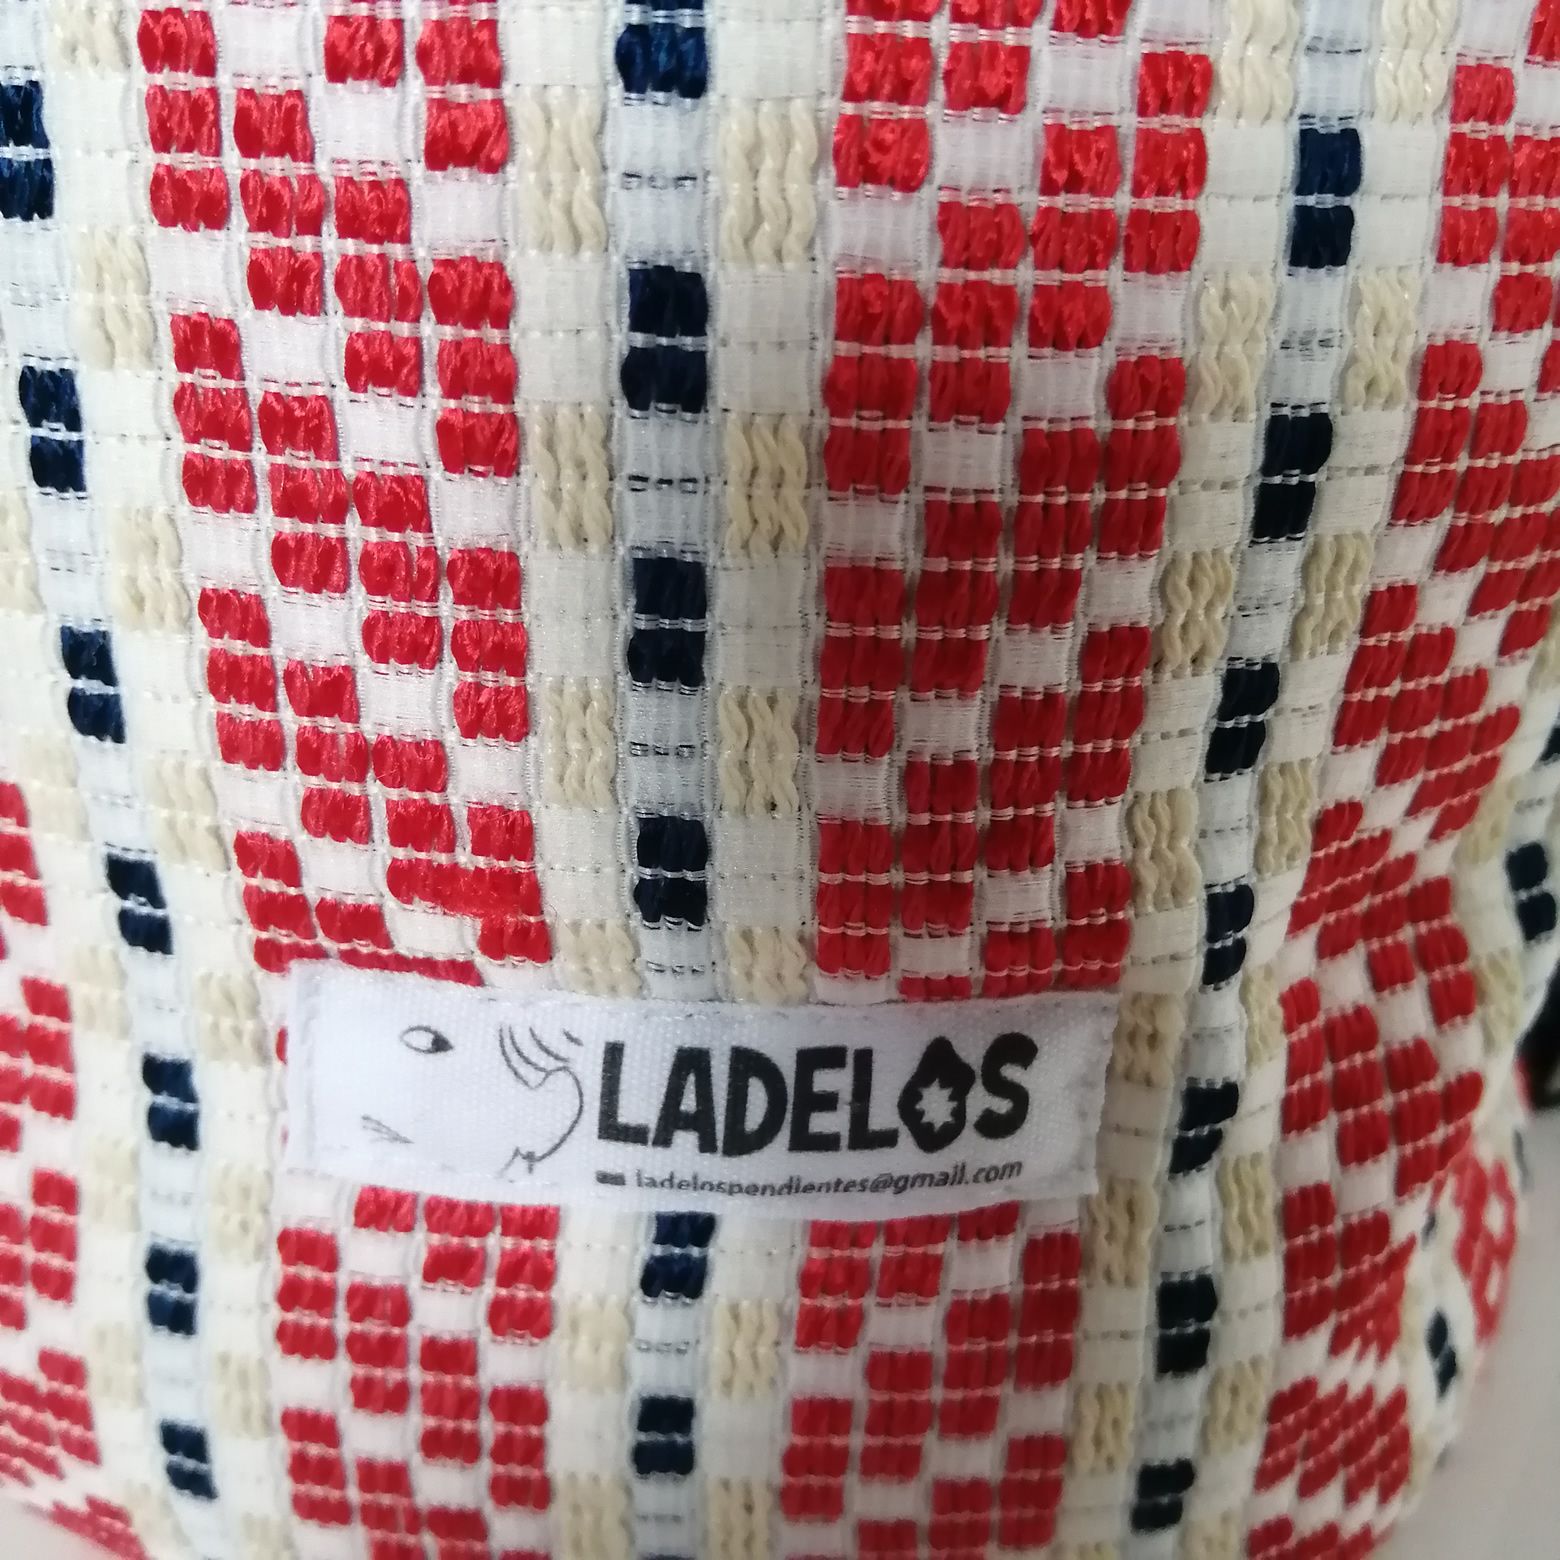 ladelos prod 20220427 0183